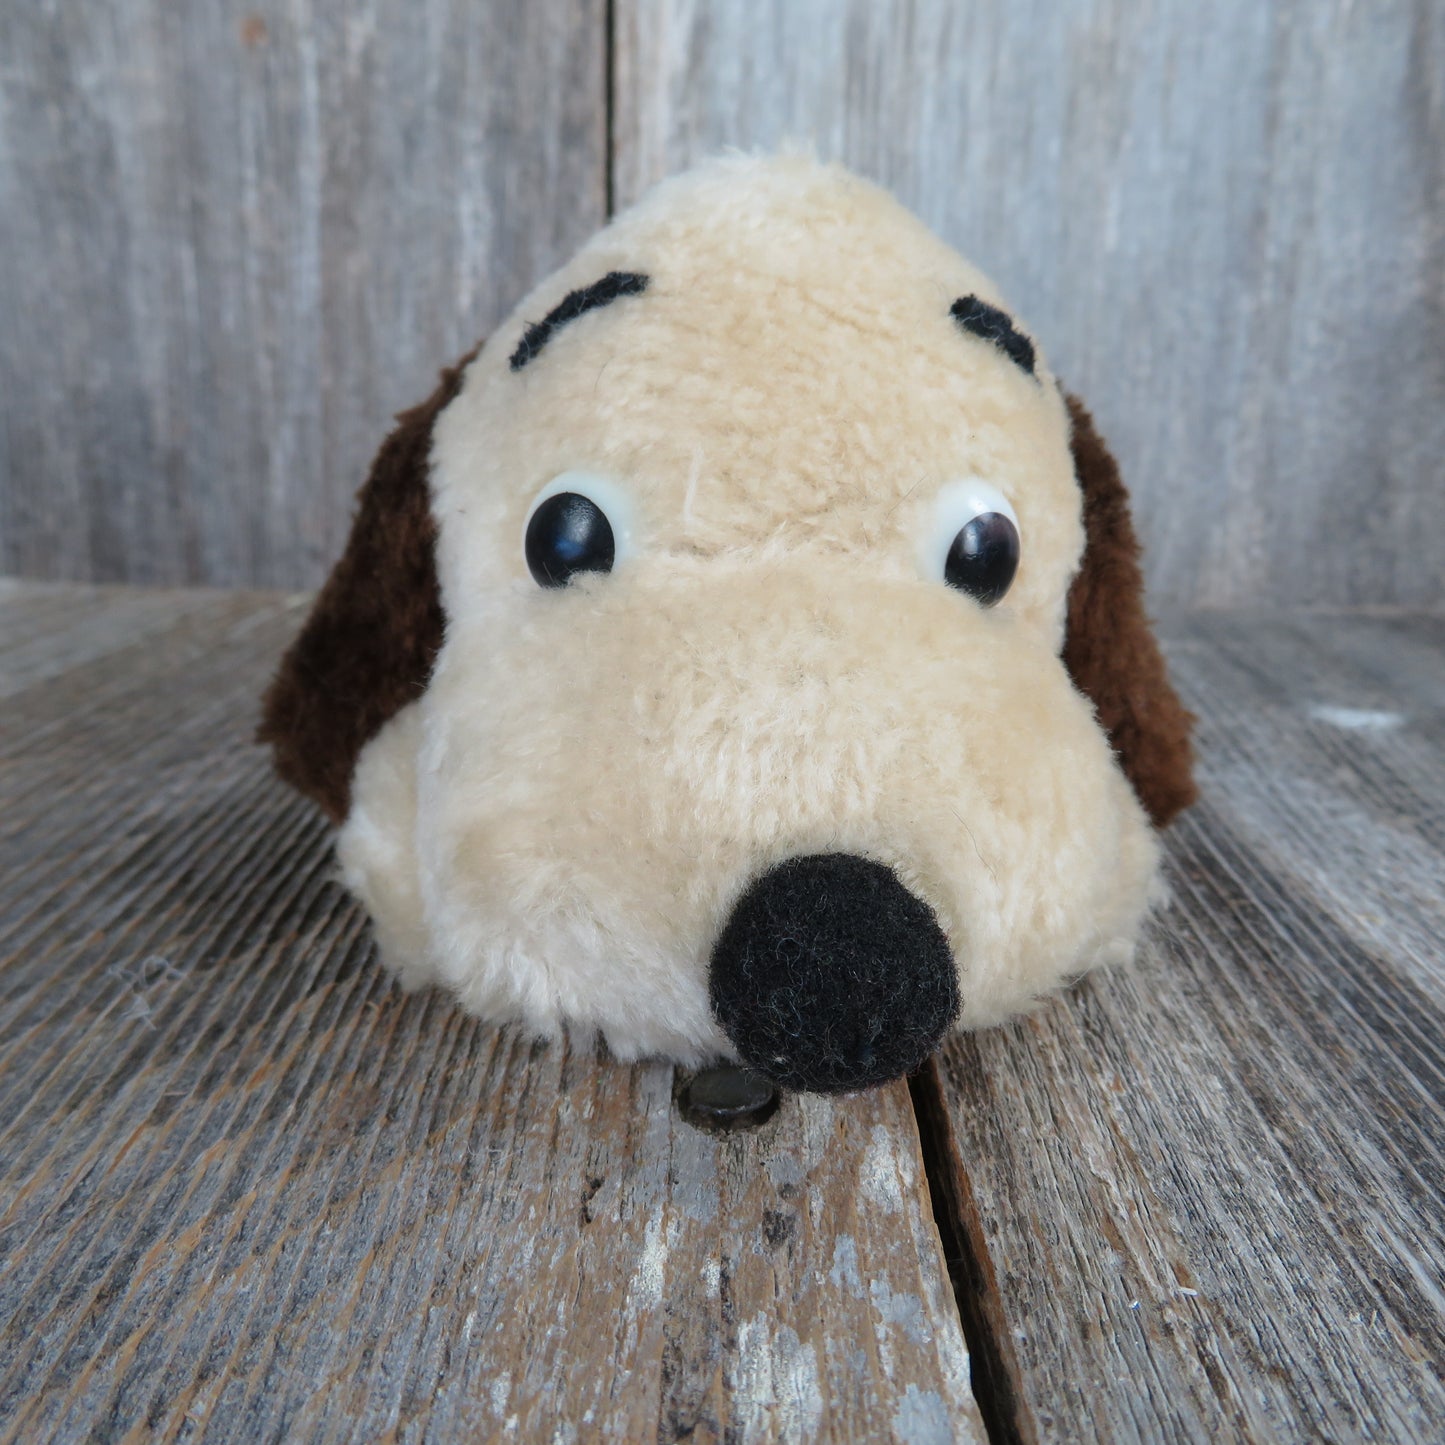 Vintage Dakin Drooper Dog Plush Cream Beige Puppy Brown Ears Stuffed Animal Toy Doll 6 Inch 1973 - At Grandma's Table